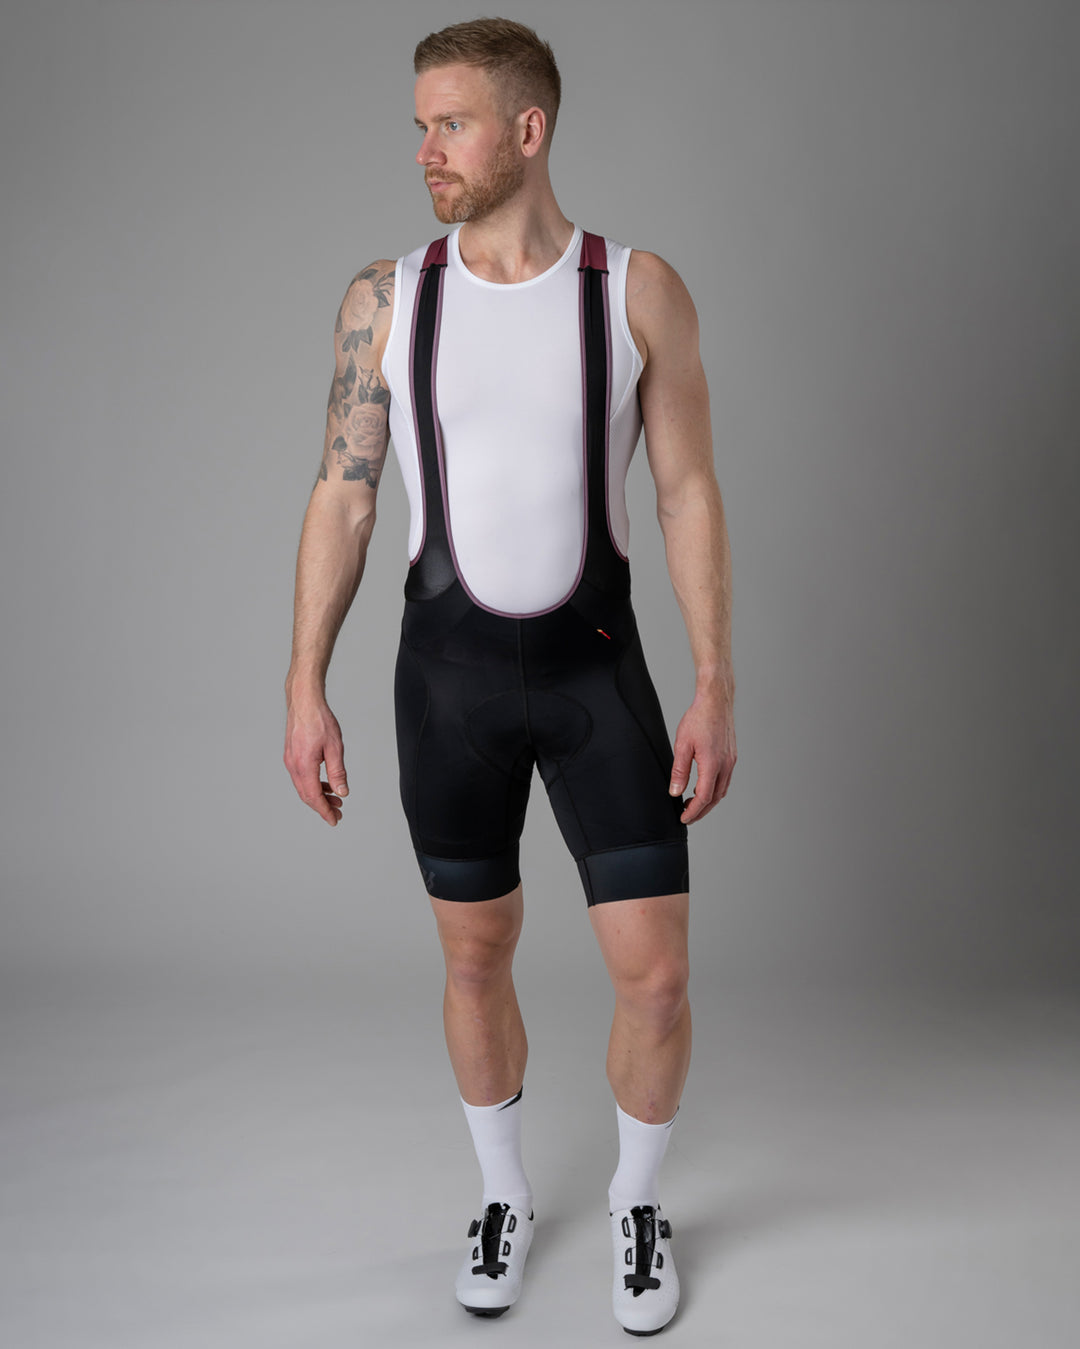 Sigr Riksväg 92 PRO - Cycling Bib Shorts for Men